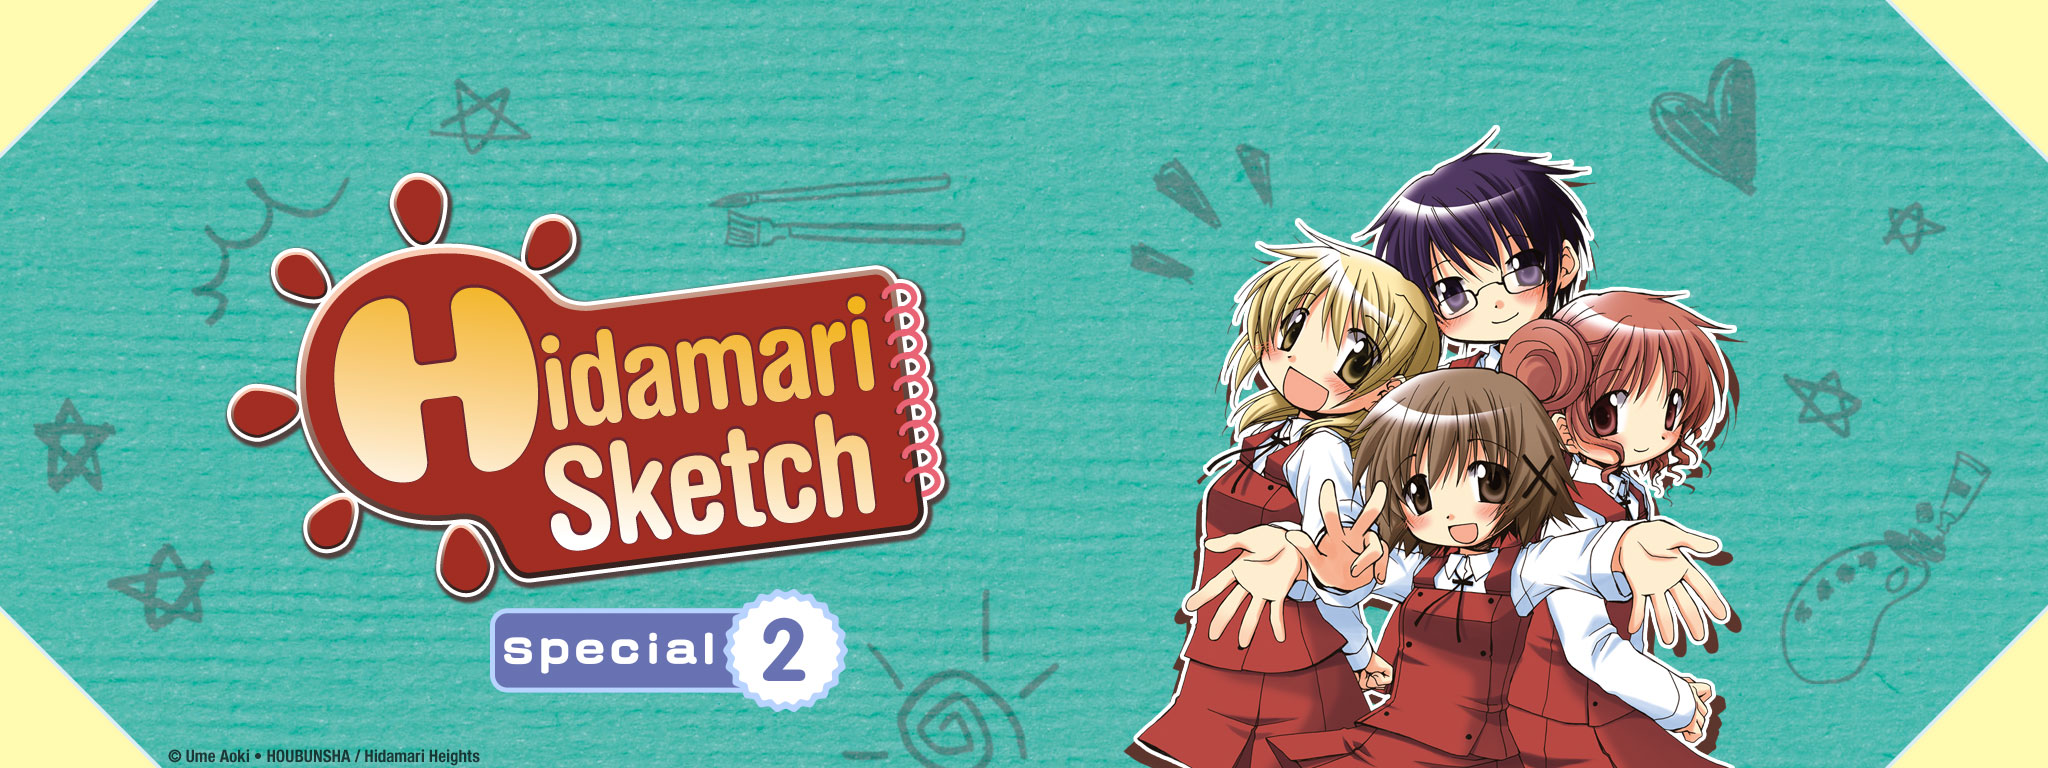 Title Art for Hidamari Sketch OVA 2